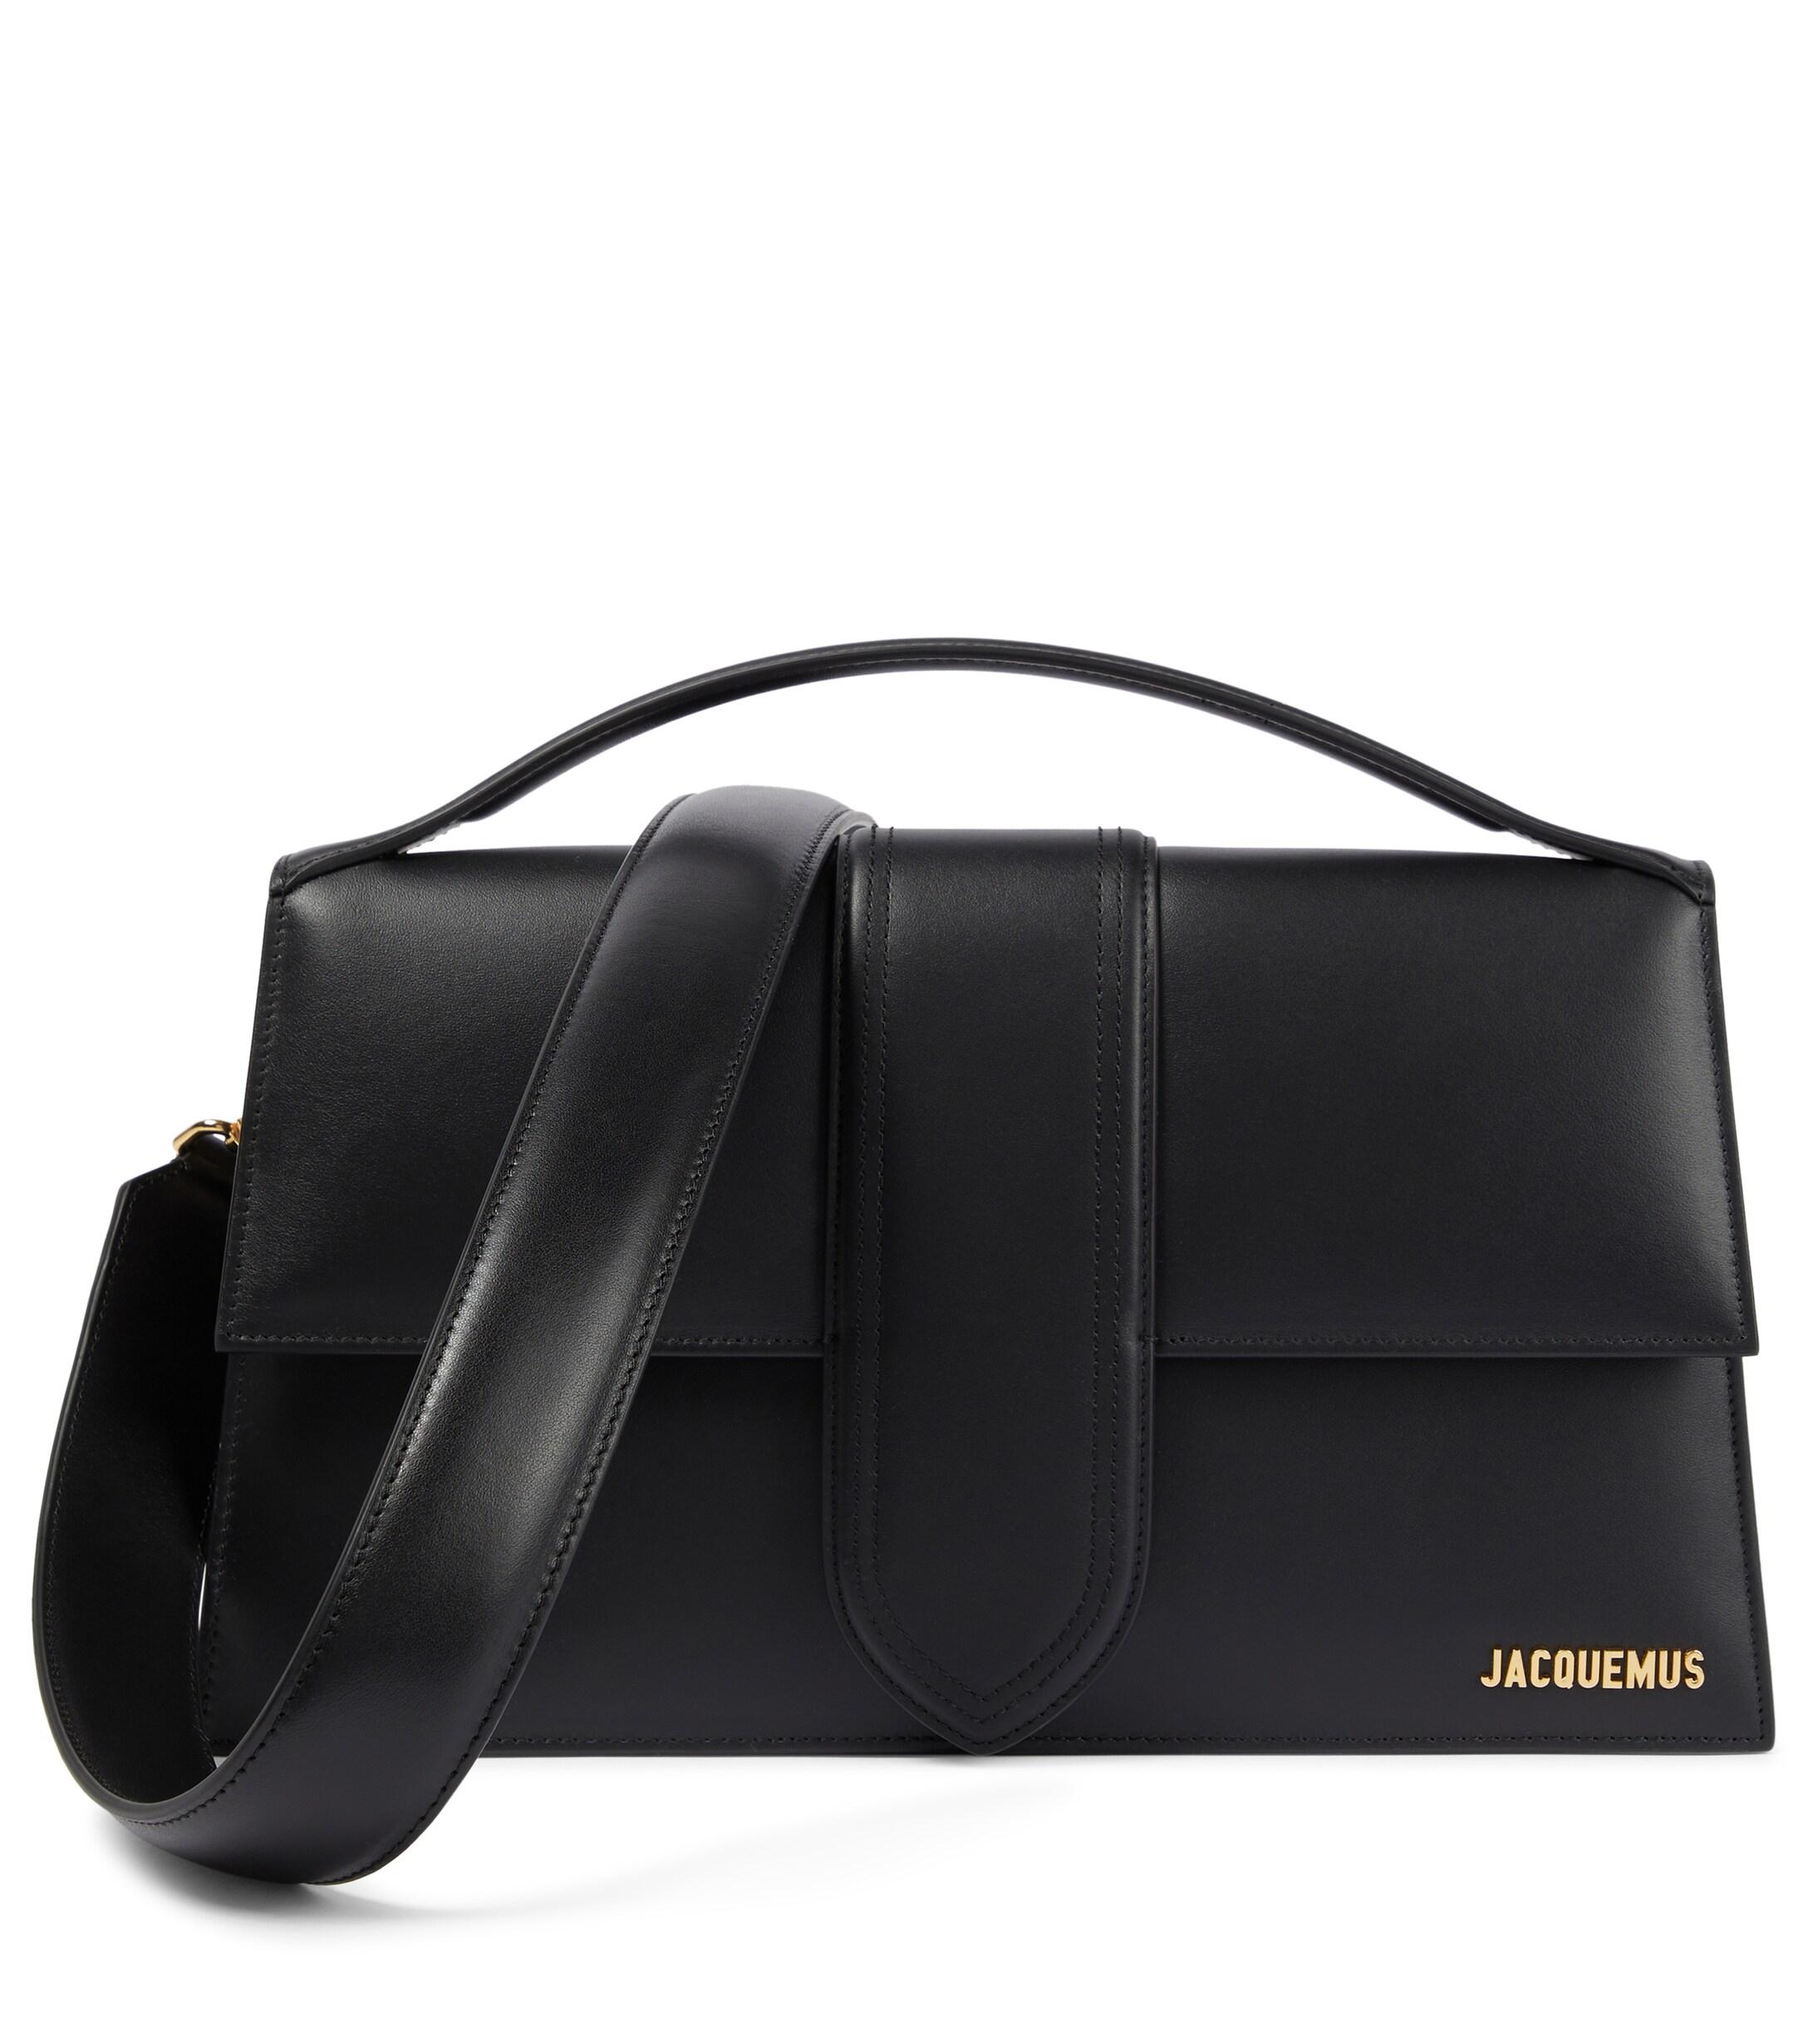 Jacquemus Le Bambinou Leather Shoulder Bag in Black | Lyst UK